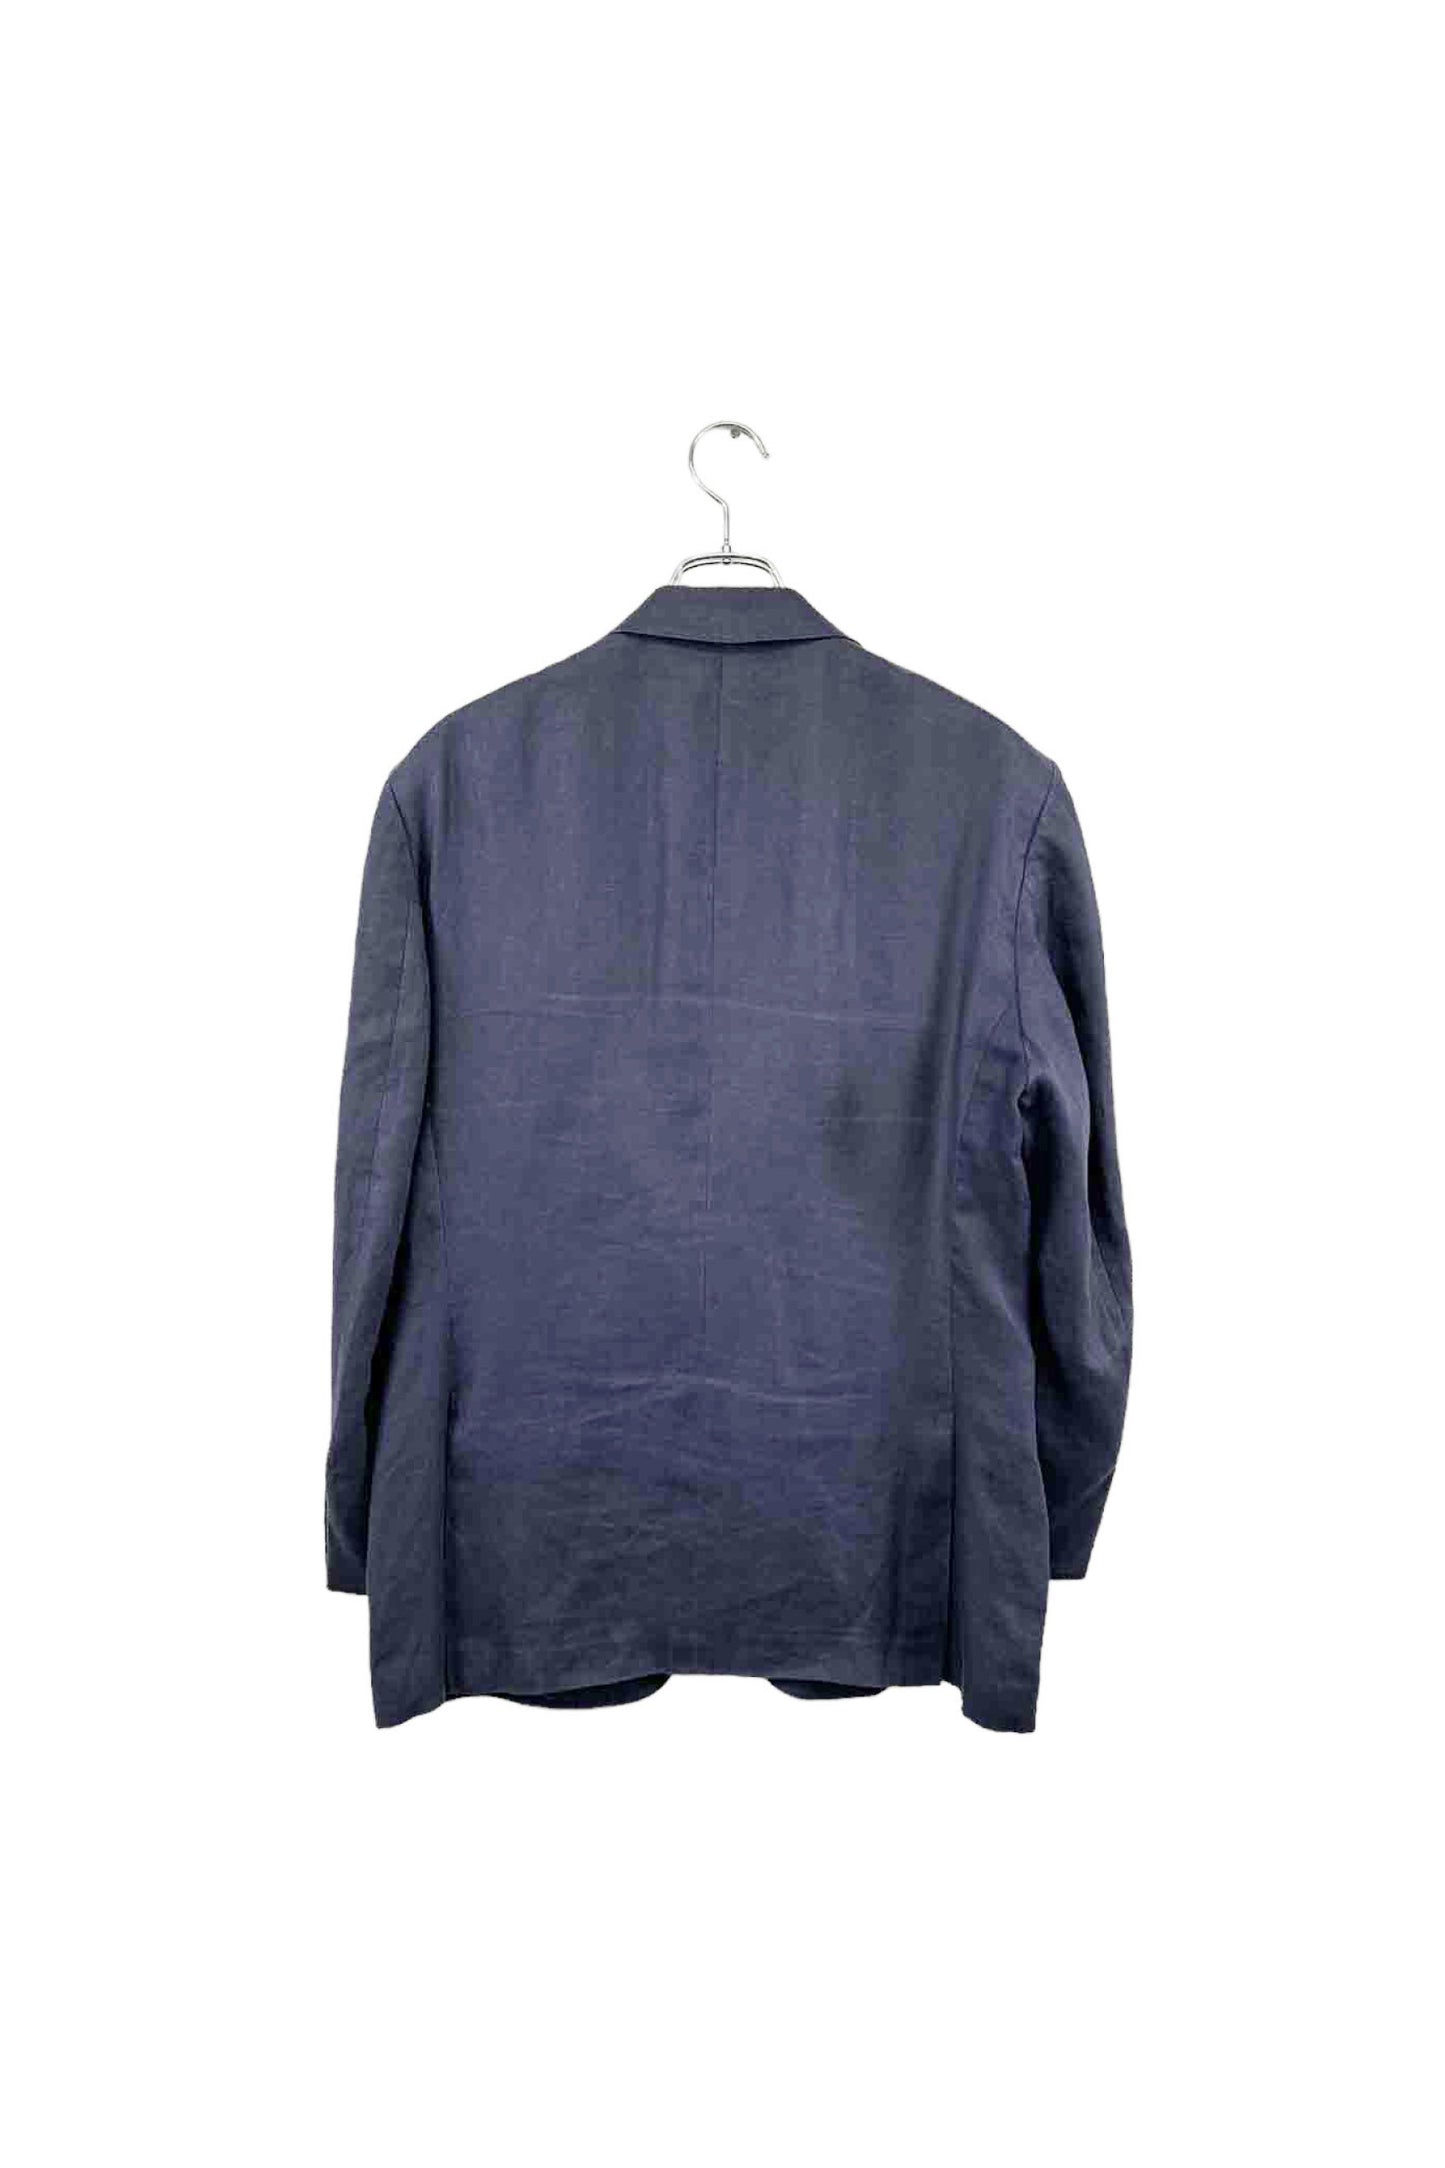 90's Polo by Ralph Lauren linen jacket